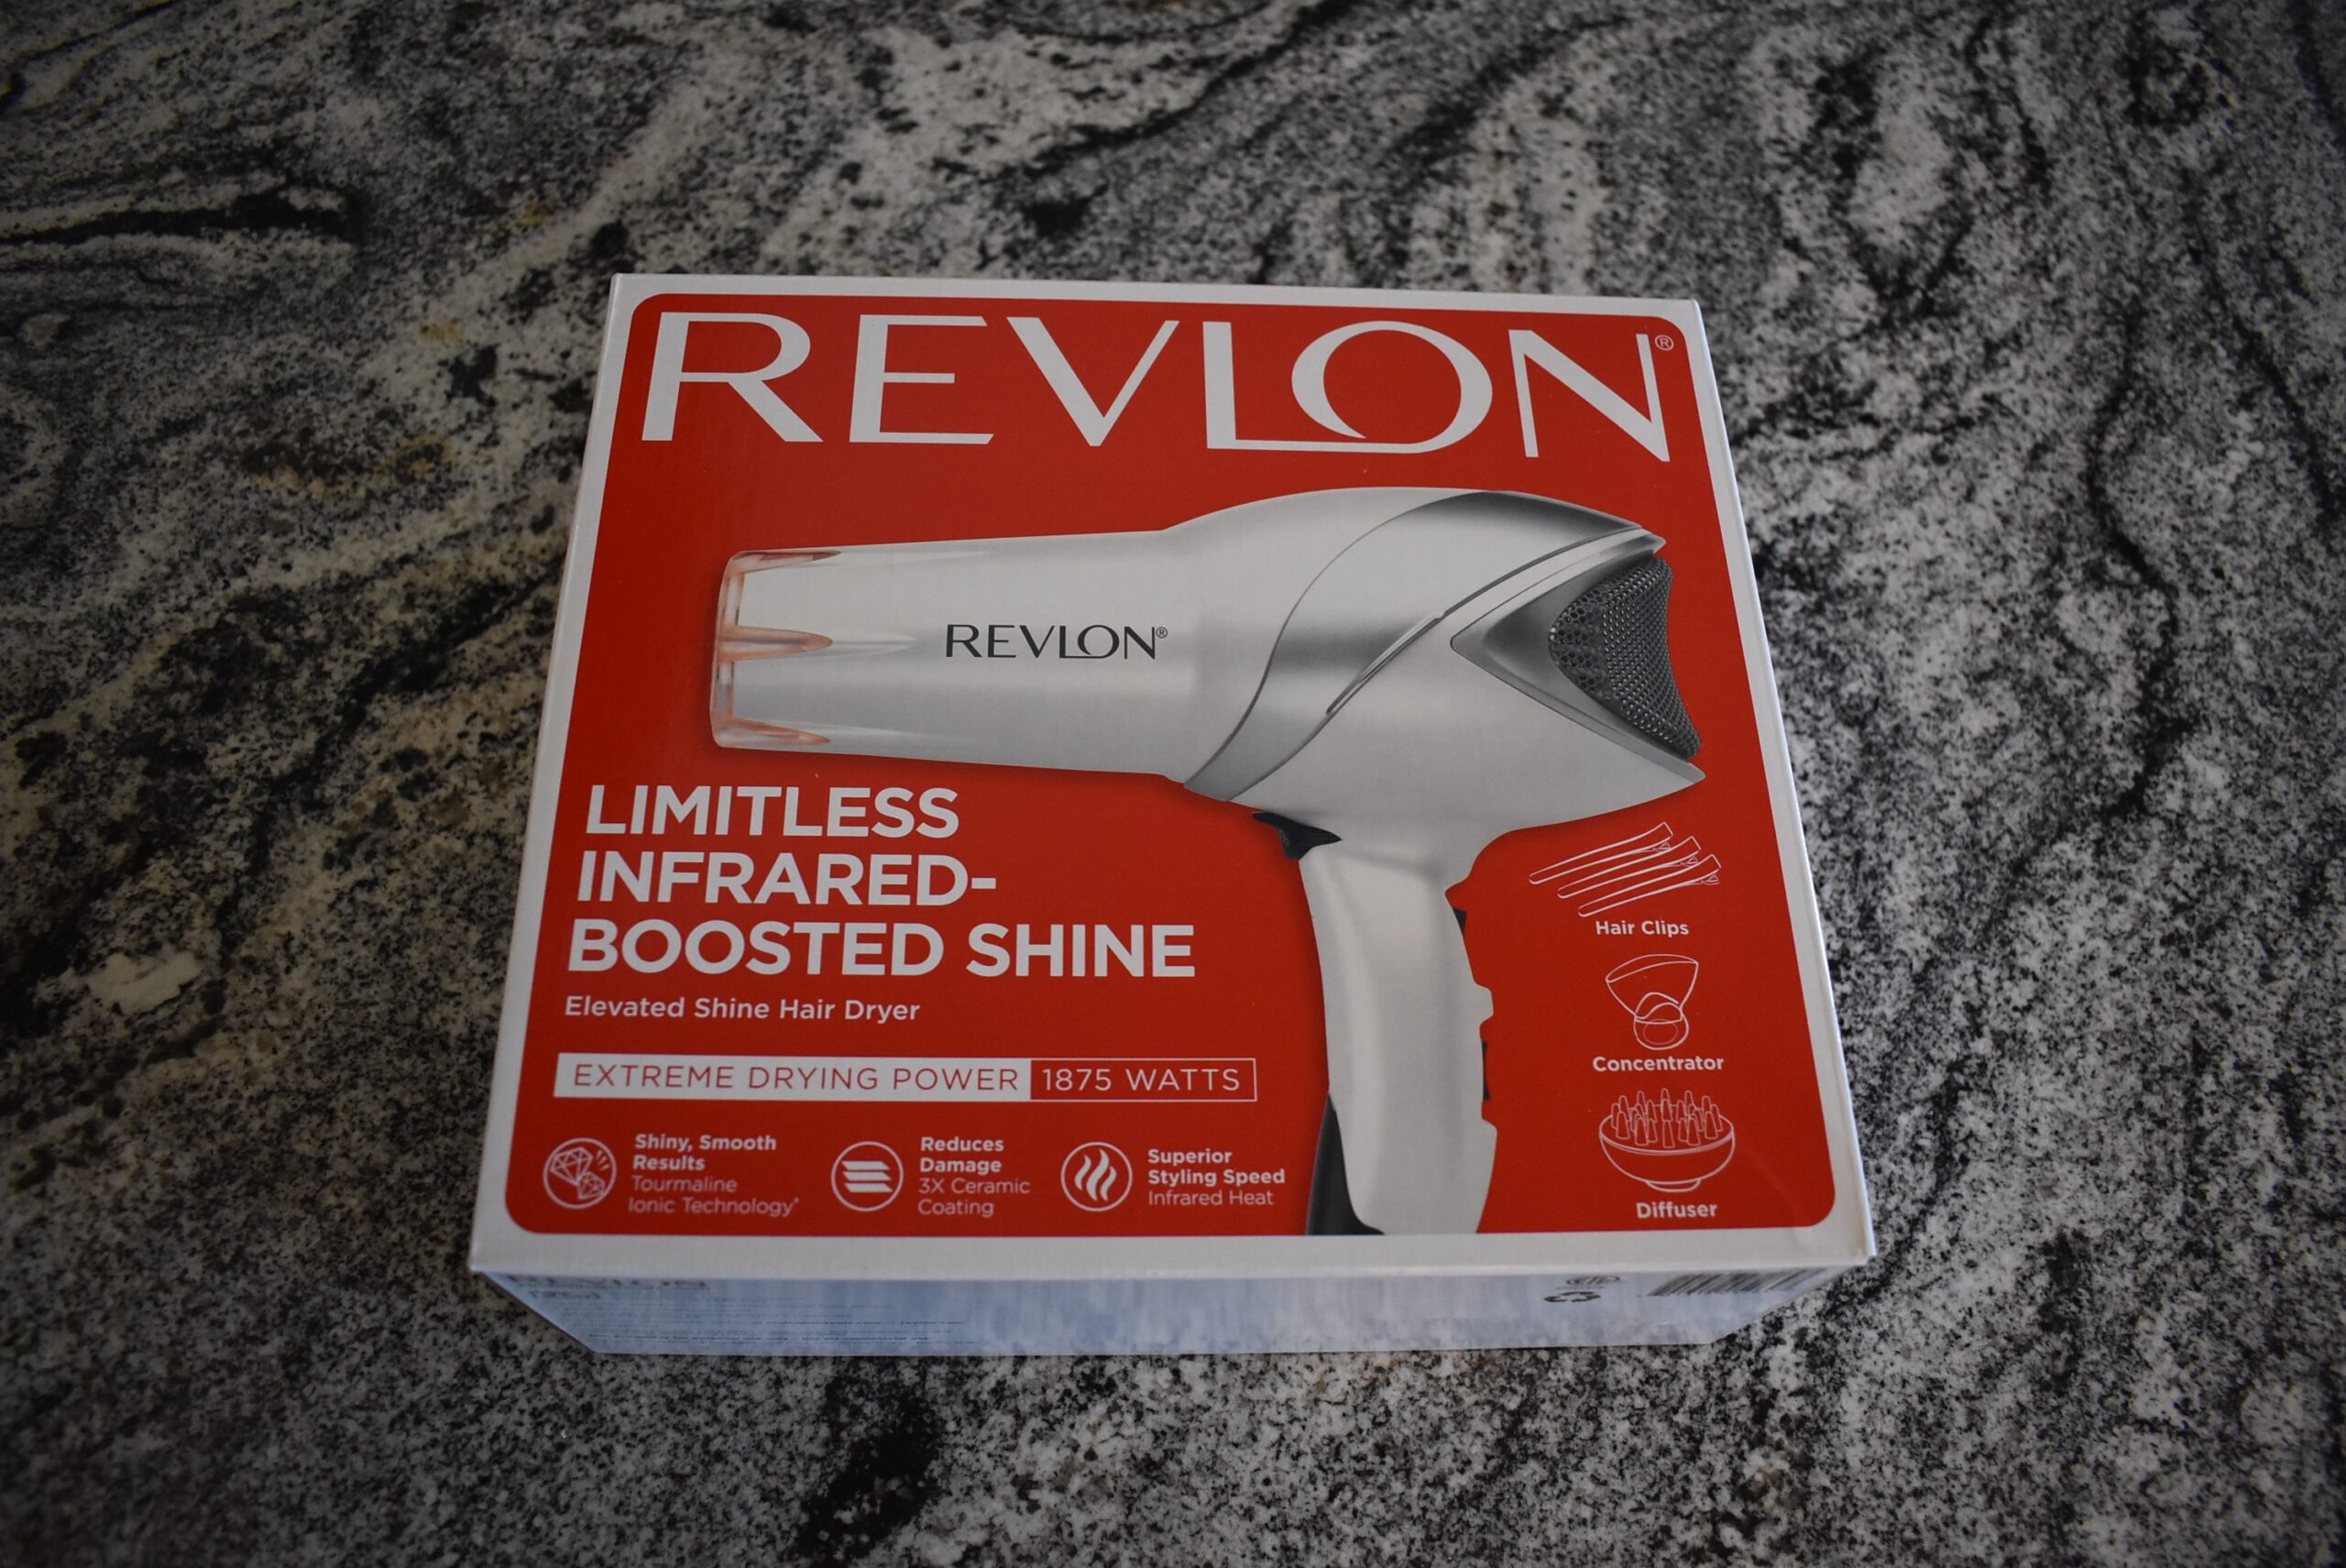 The Revlon 1875 watt infrared hair dryer in its box